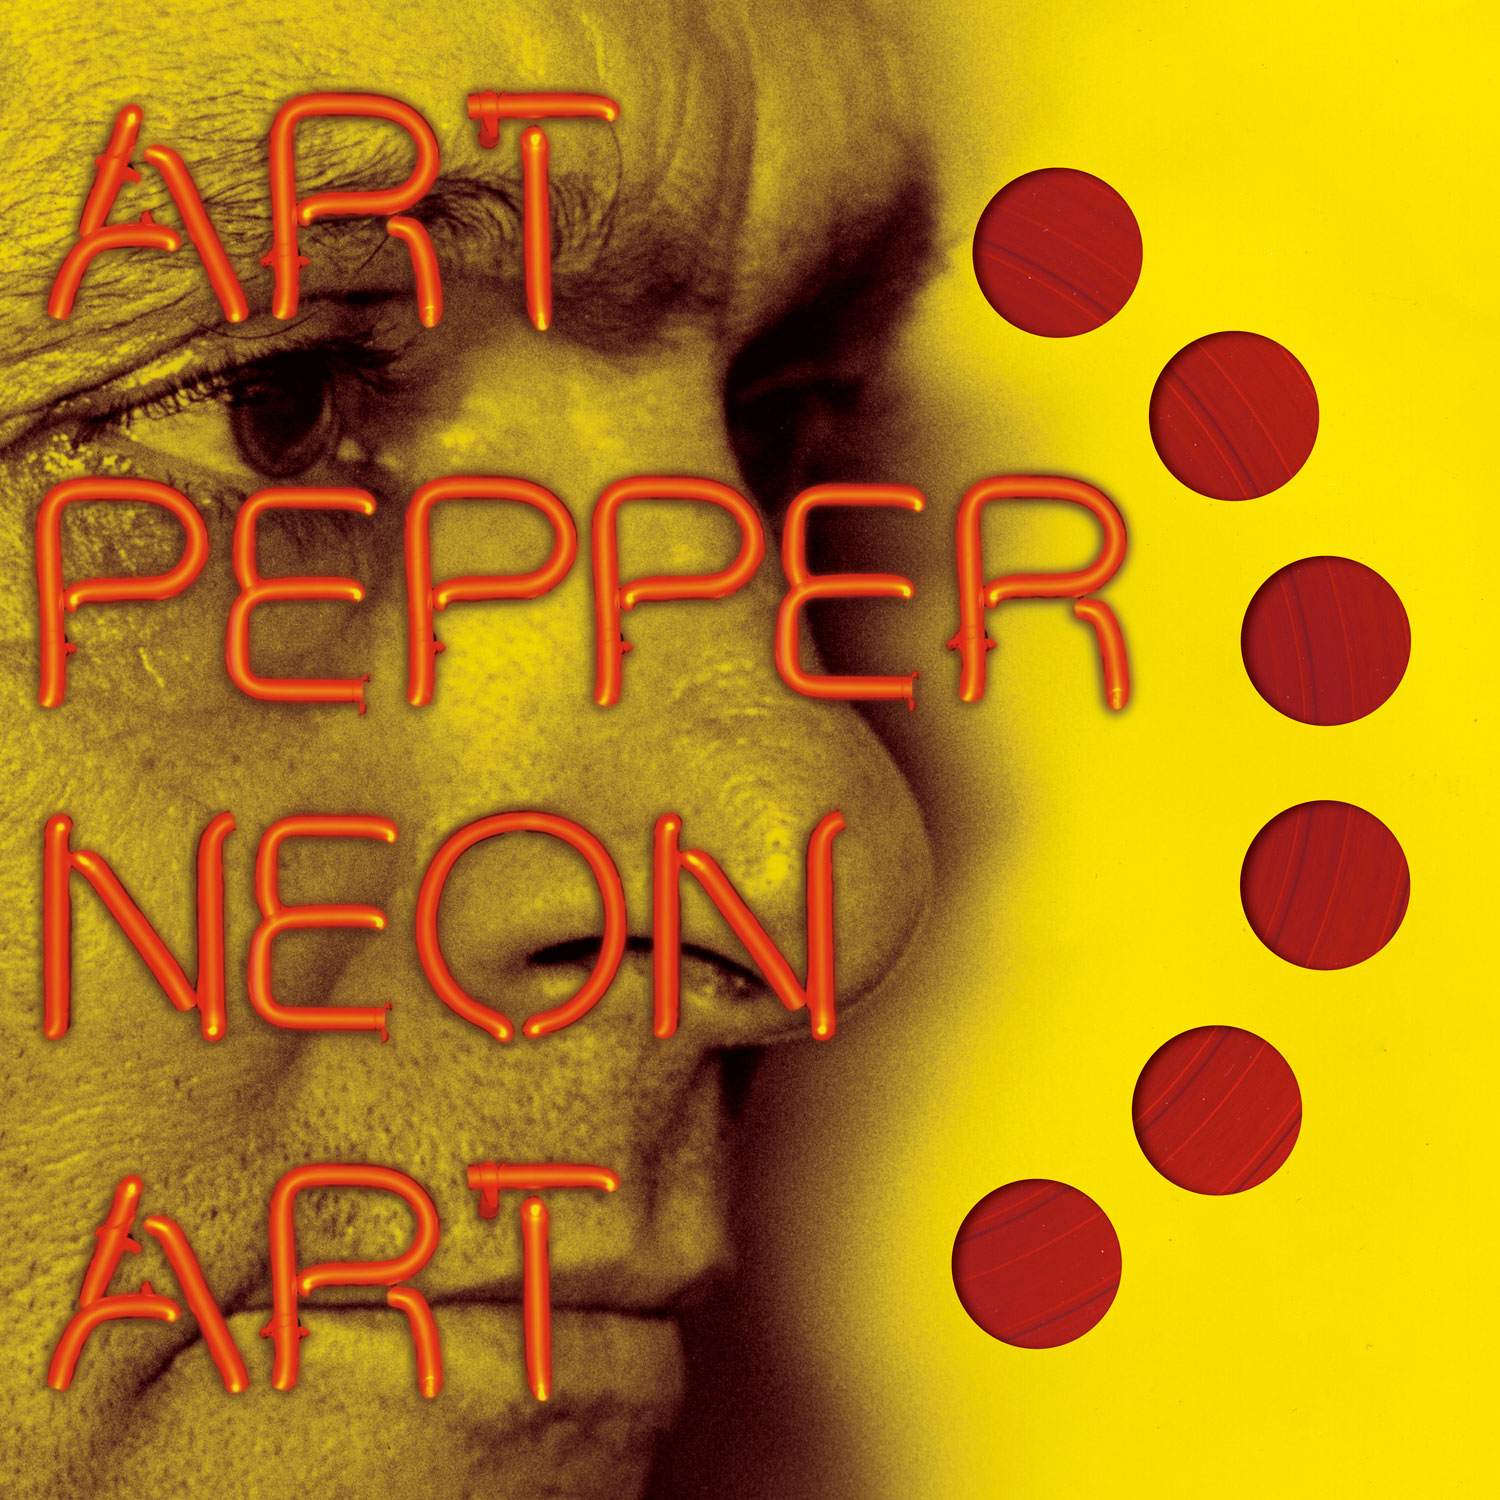 iڍ F ART PEPPER (LP) NEON ART VOL.3yRED@Cidl!!z